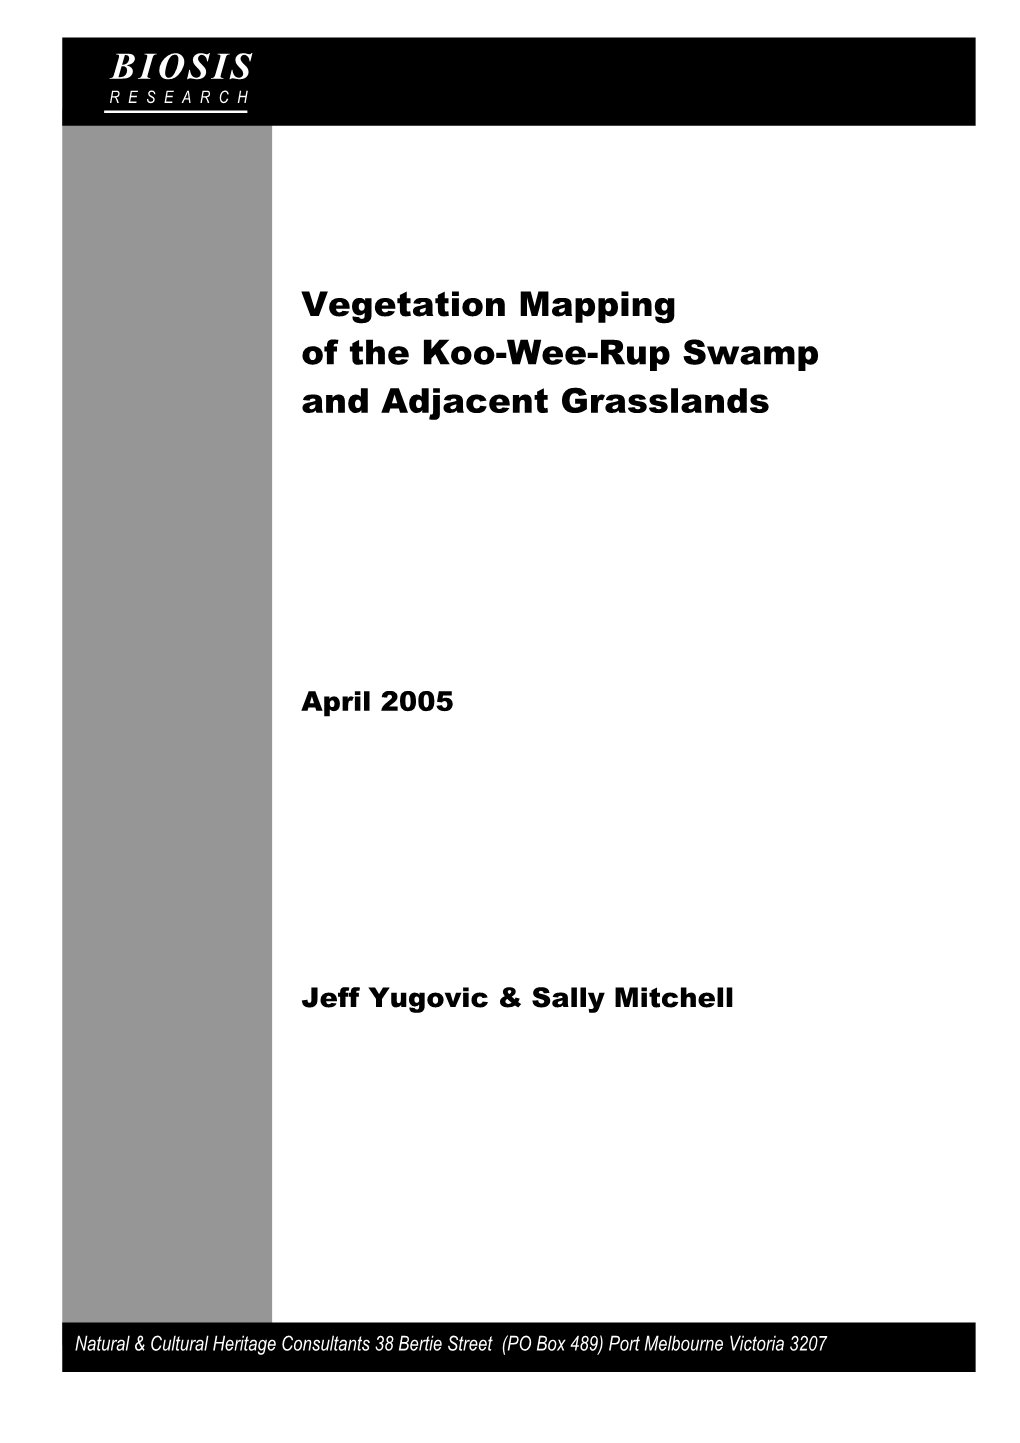 Vegetation Mapping of Koo-Wee-Rup Swamp Report